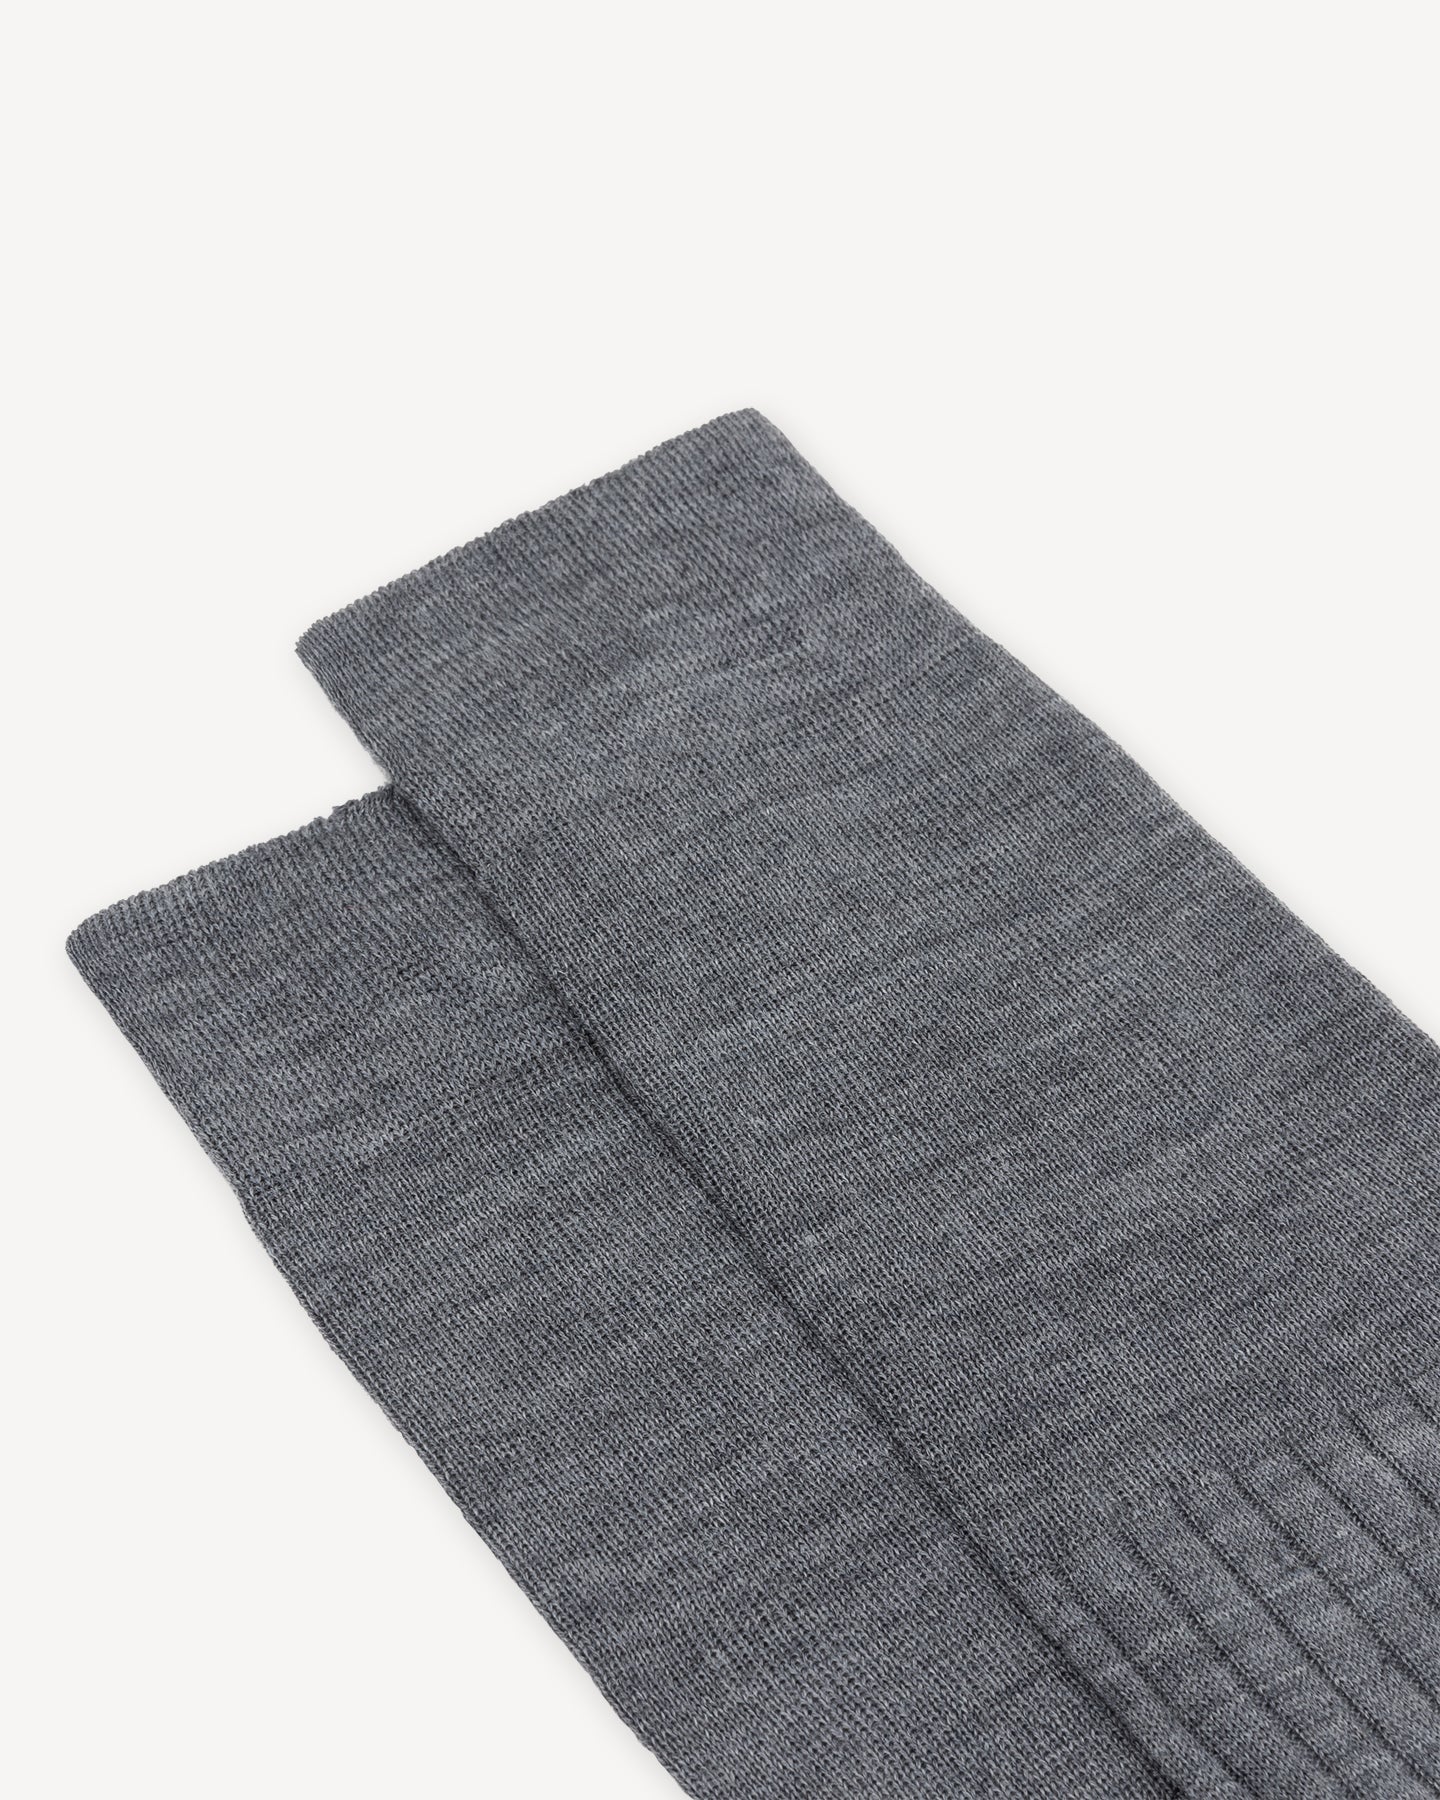 Light grey knee high socks made from Australian merino wool